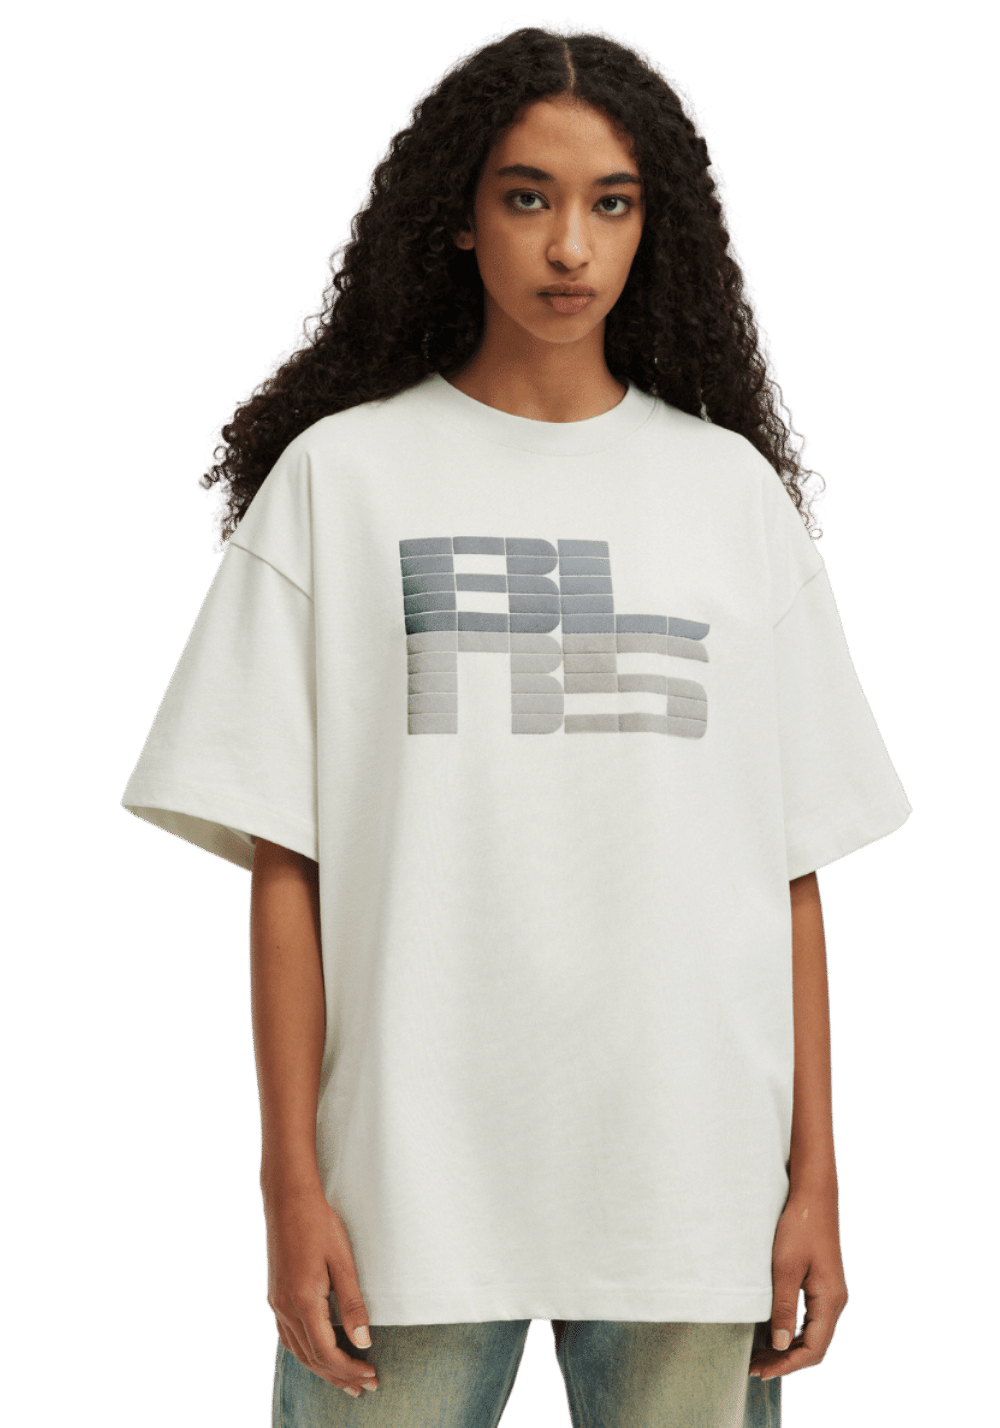 Deconstruct Printe T-shirt - PSYLOS 1, Deconstruct Printe T-shirt, T-Shirt, Boneless, PSYLOS 1